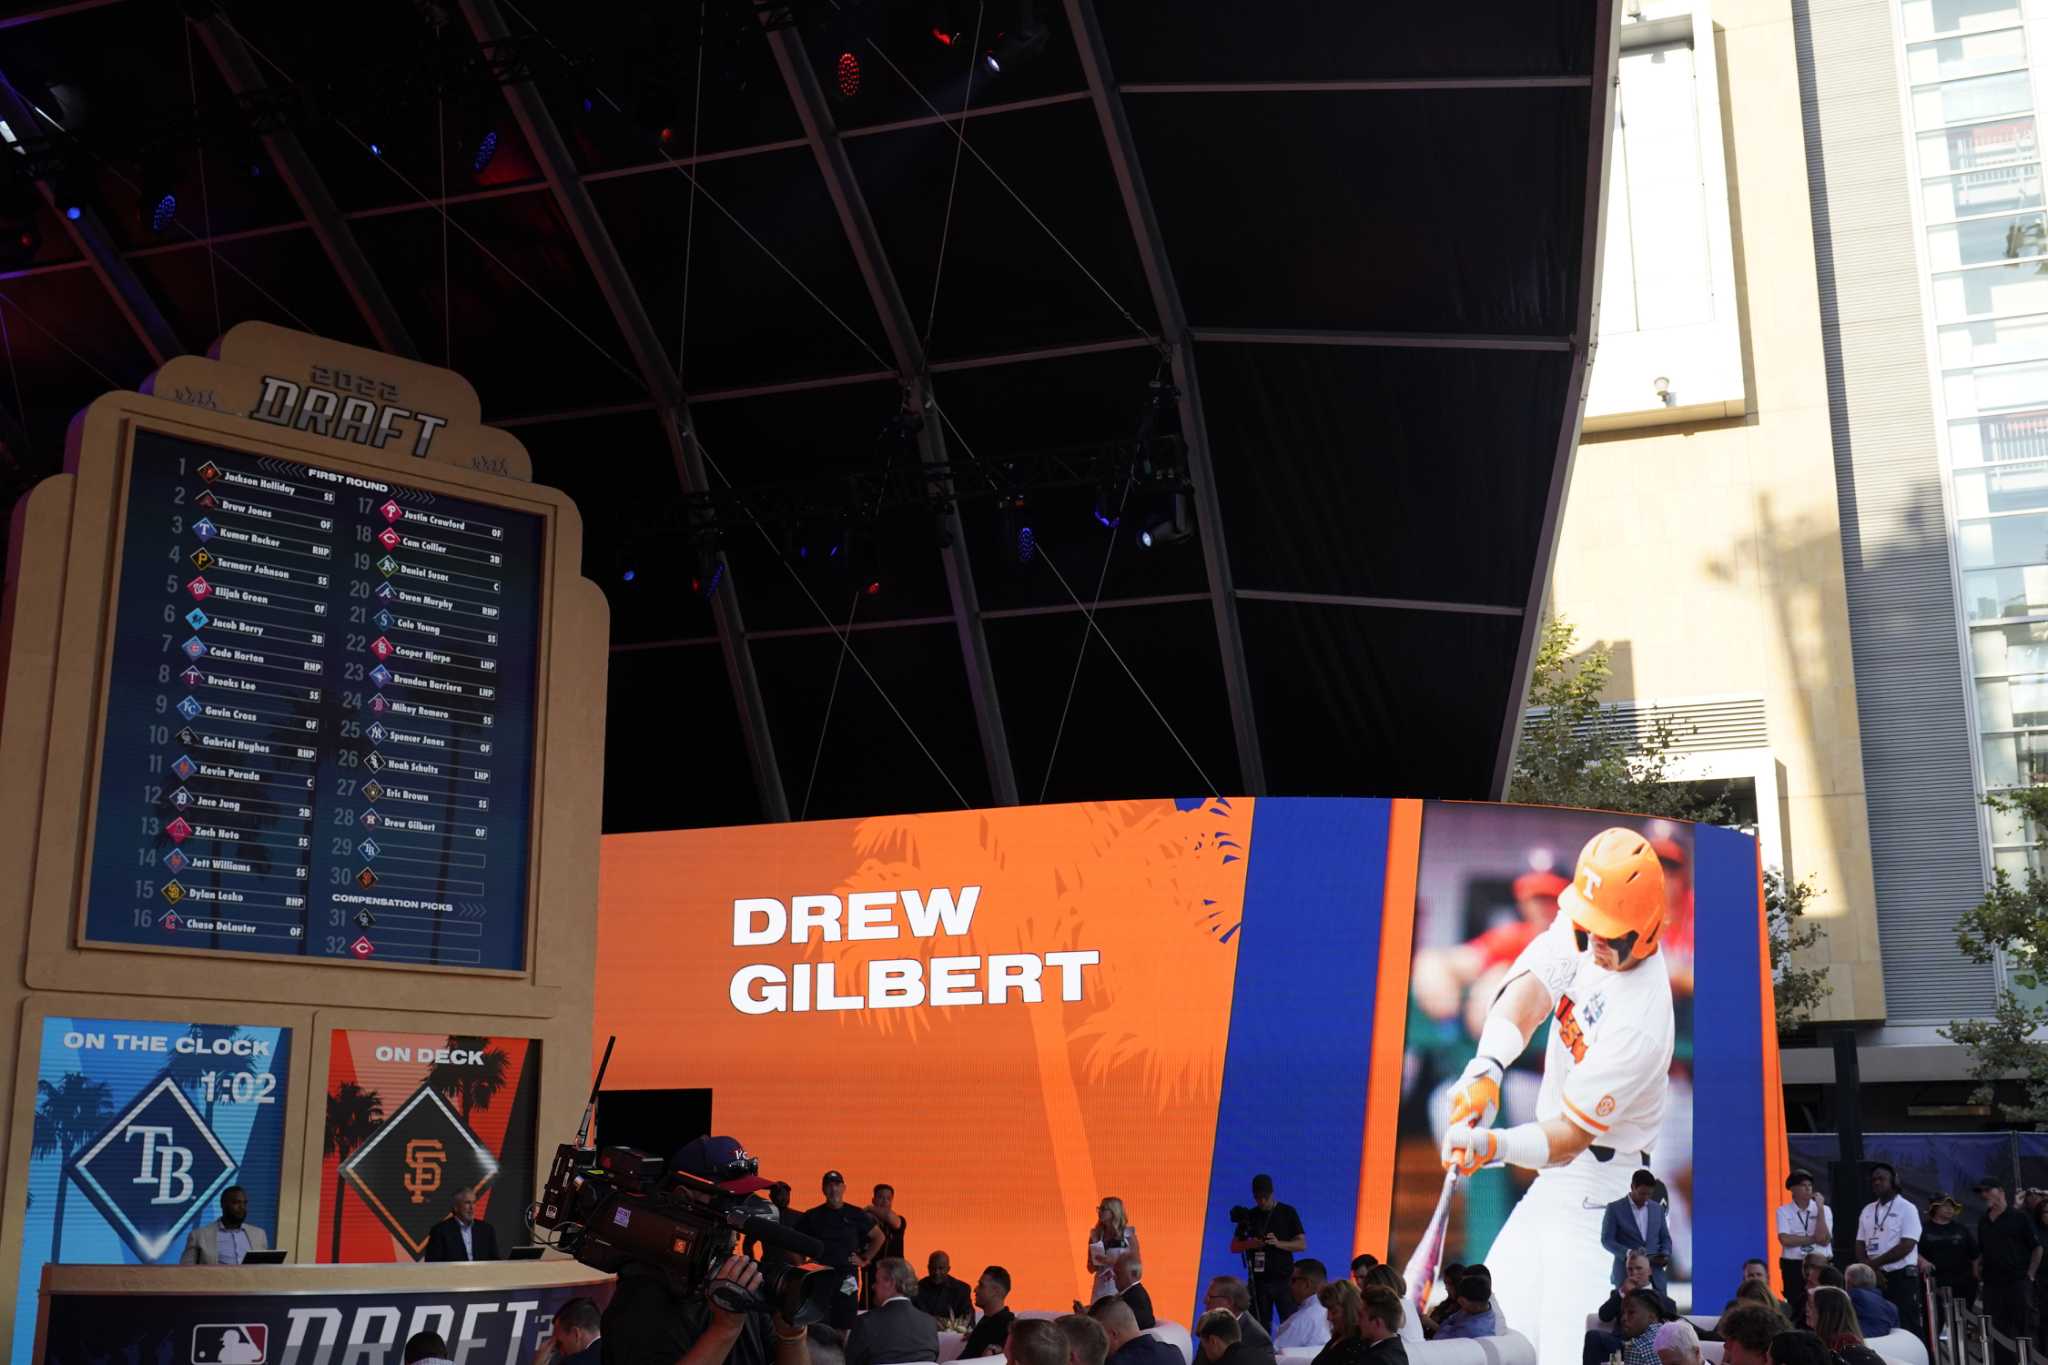 Former Vols baseball star Drew Gilbert delivers terrific 'nonchalant' bat  flip - A to Z Sports